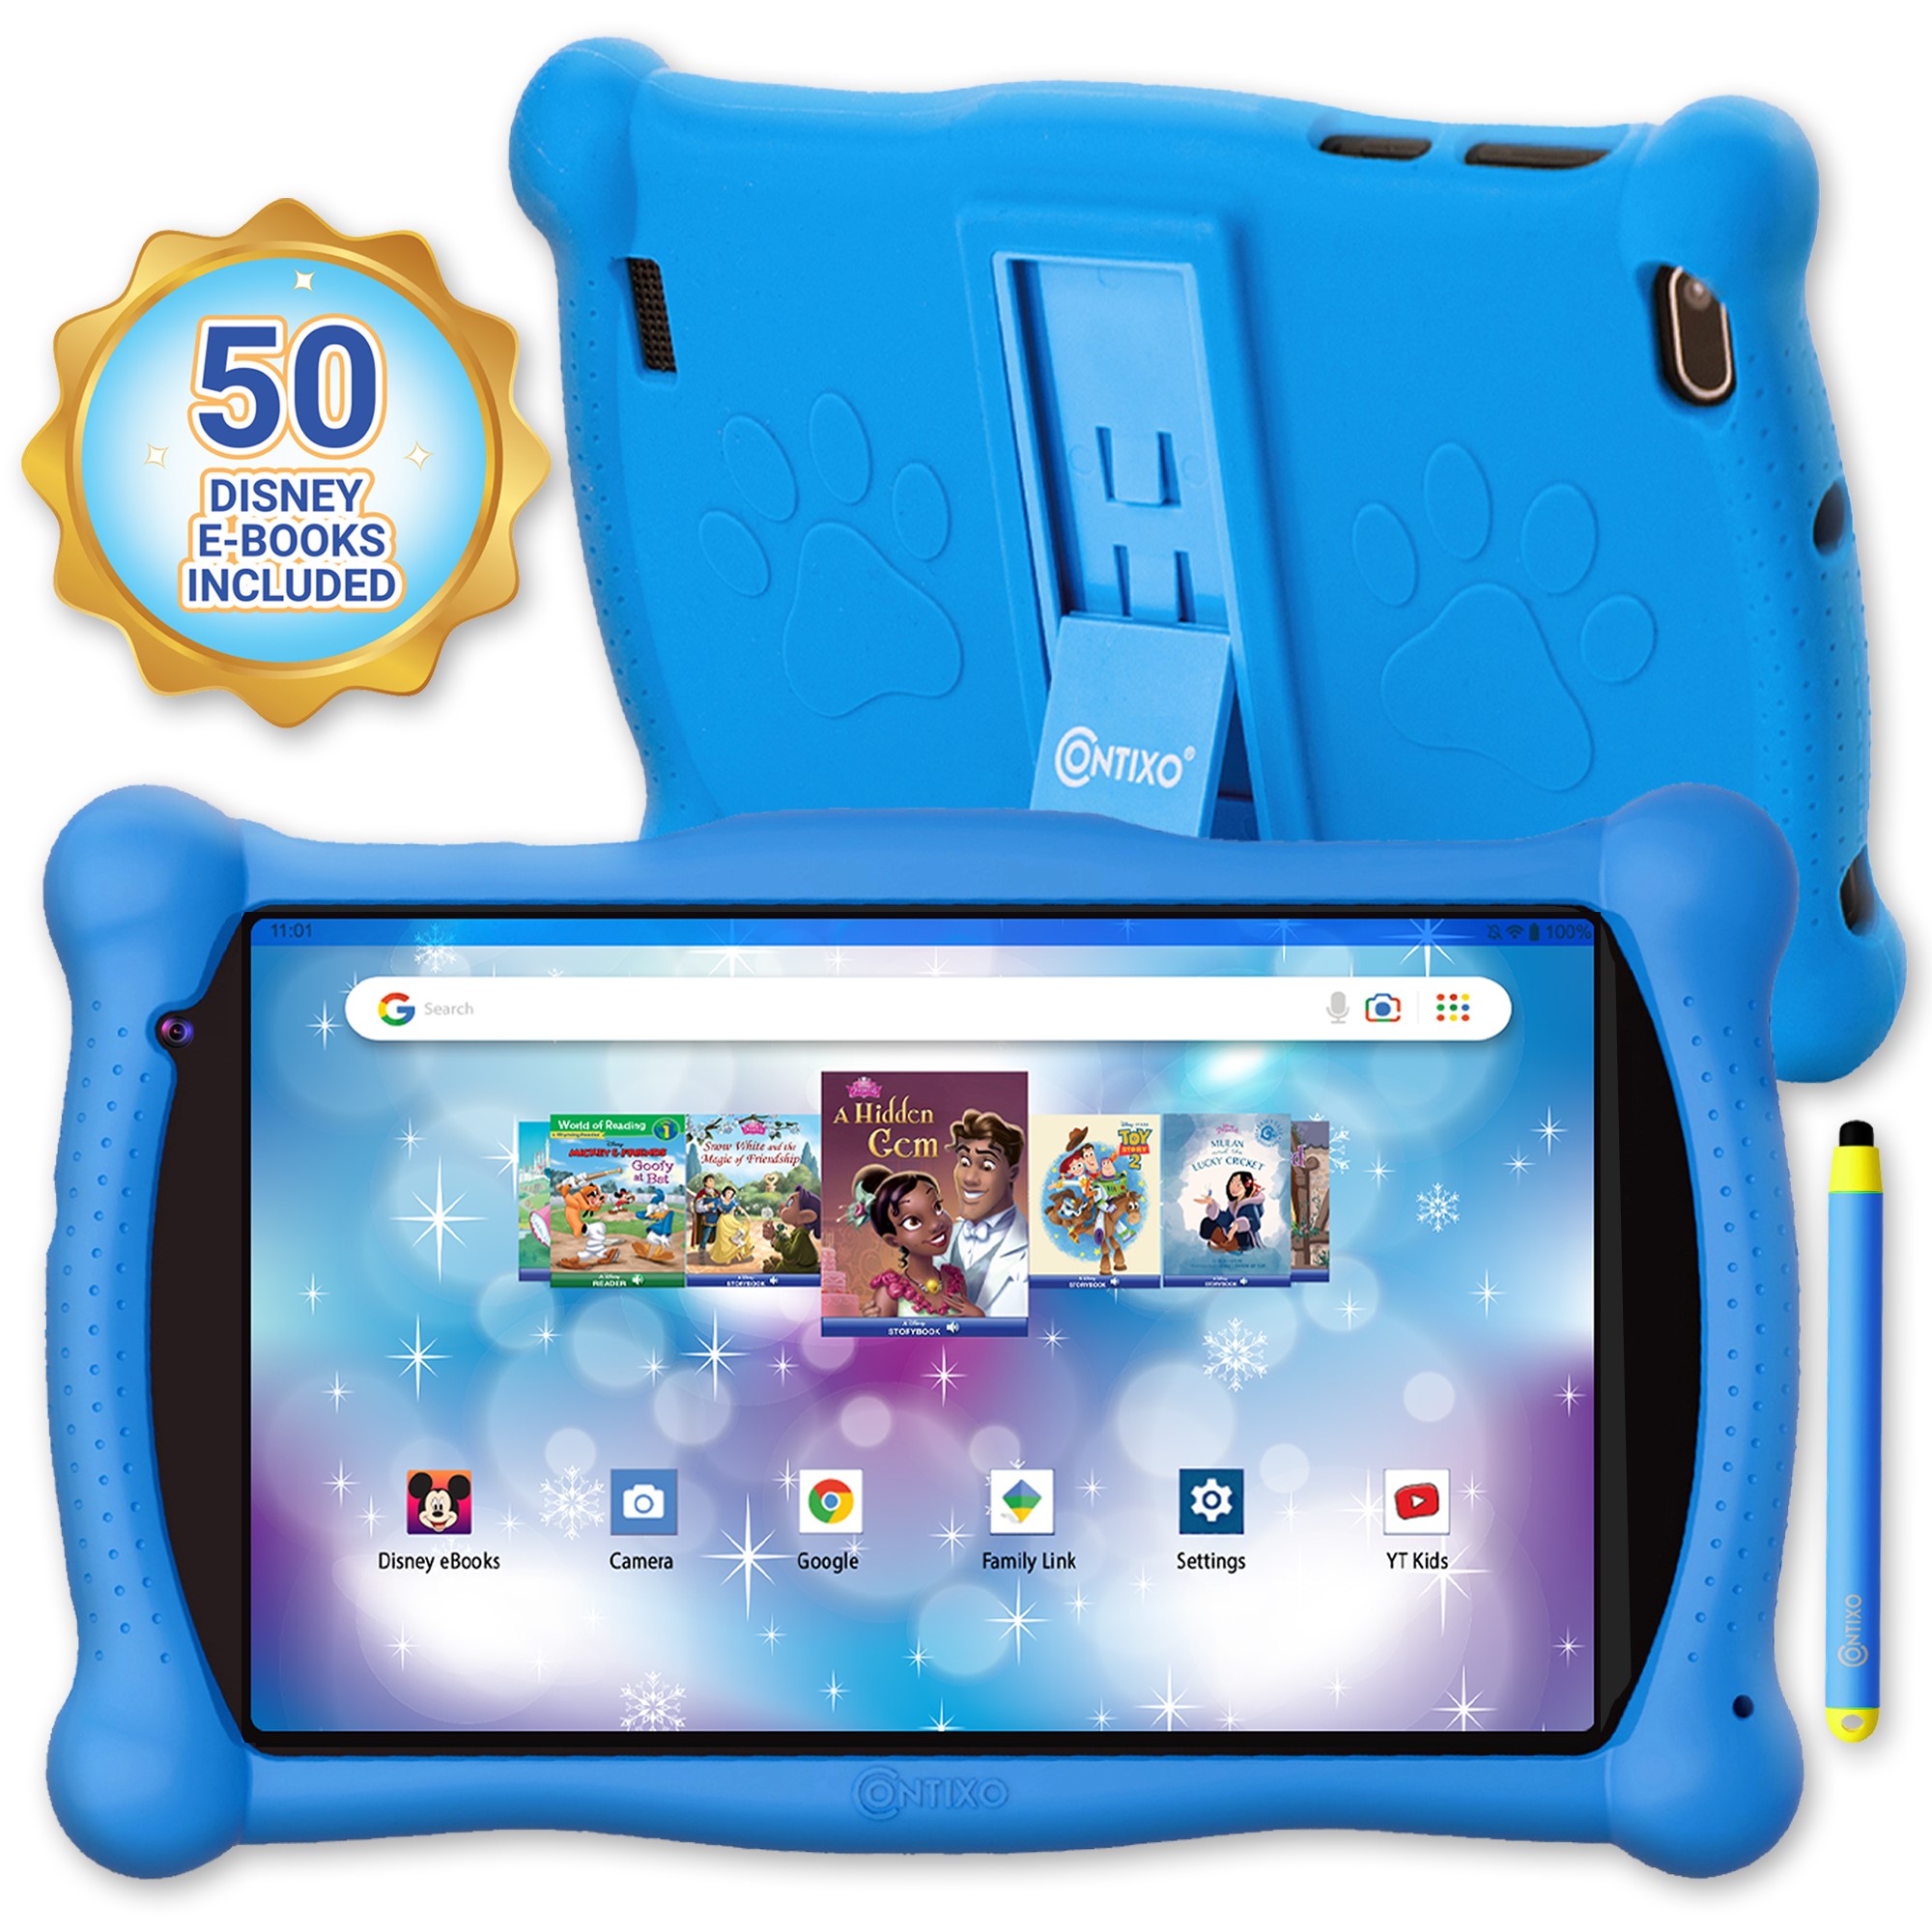 Contixo V10 7" Kids Tablet, Headphone and Tablet Bag Bundle, 32GB Storage, 50+ Disney eBooks, Shockproof Case w/ Kickstand and Stylus - Blue - image 3 of 6